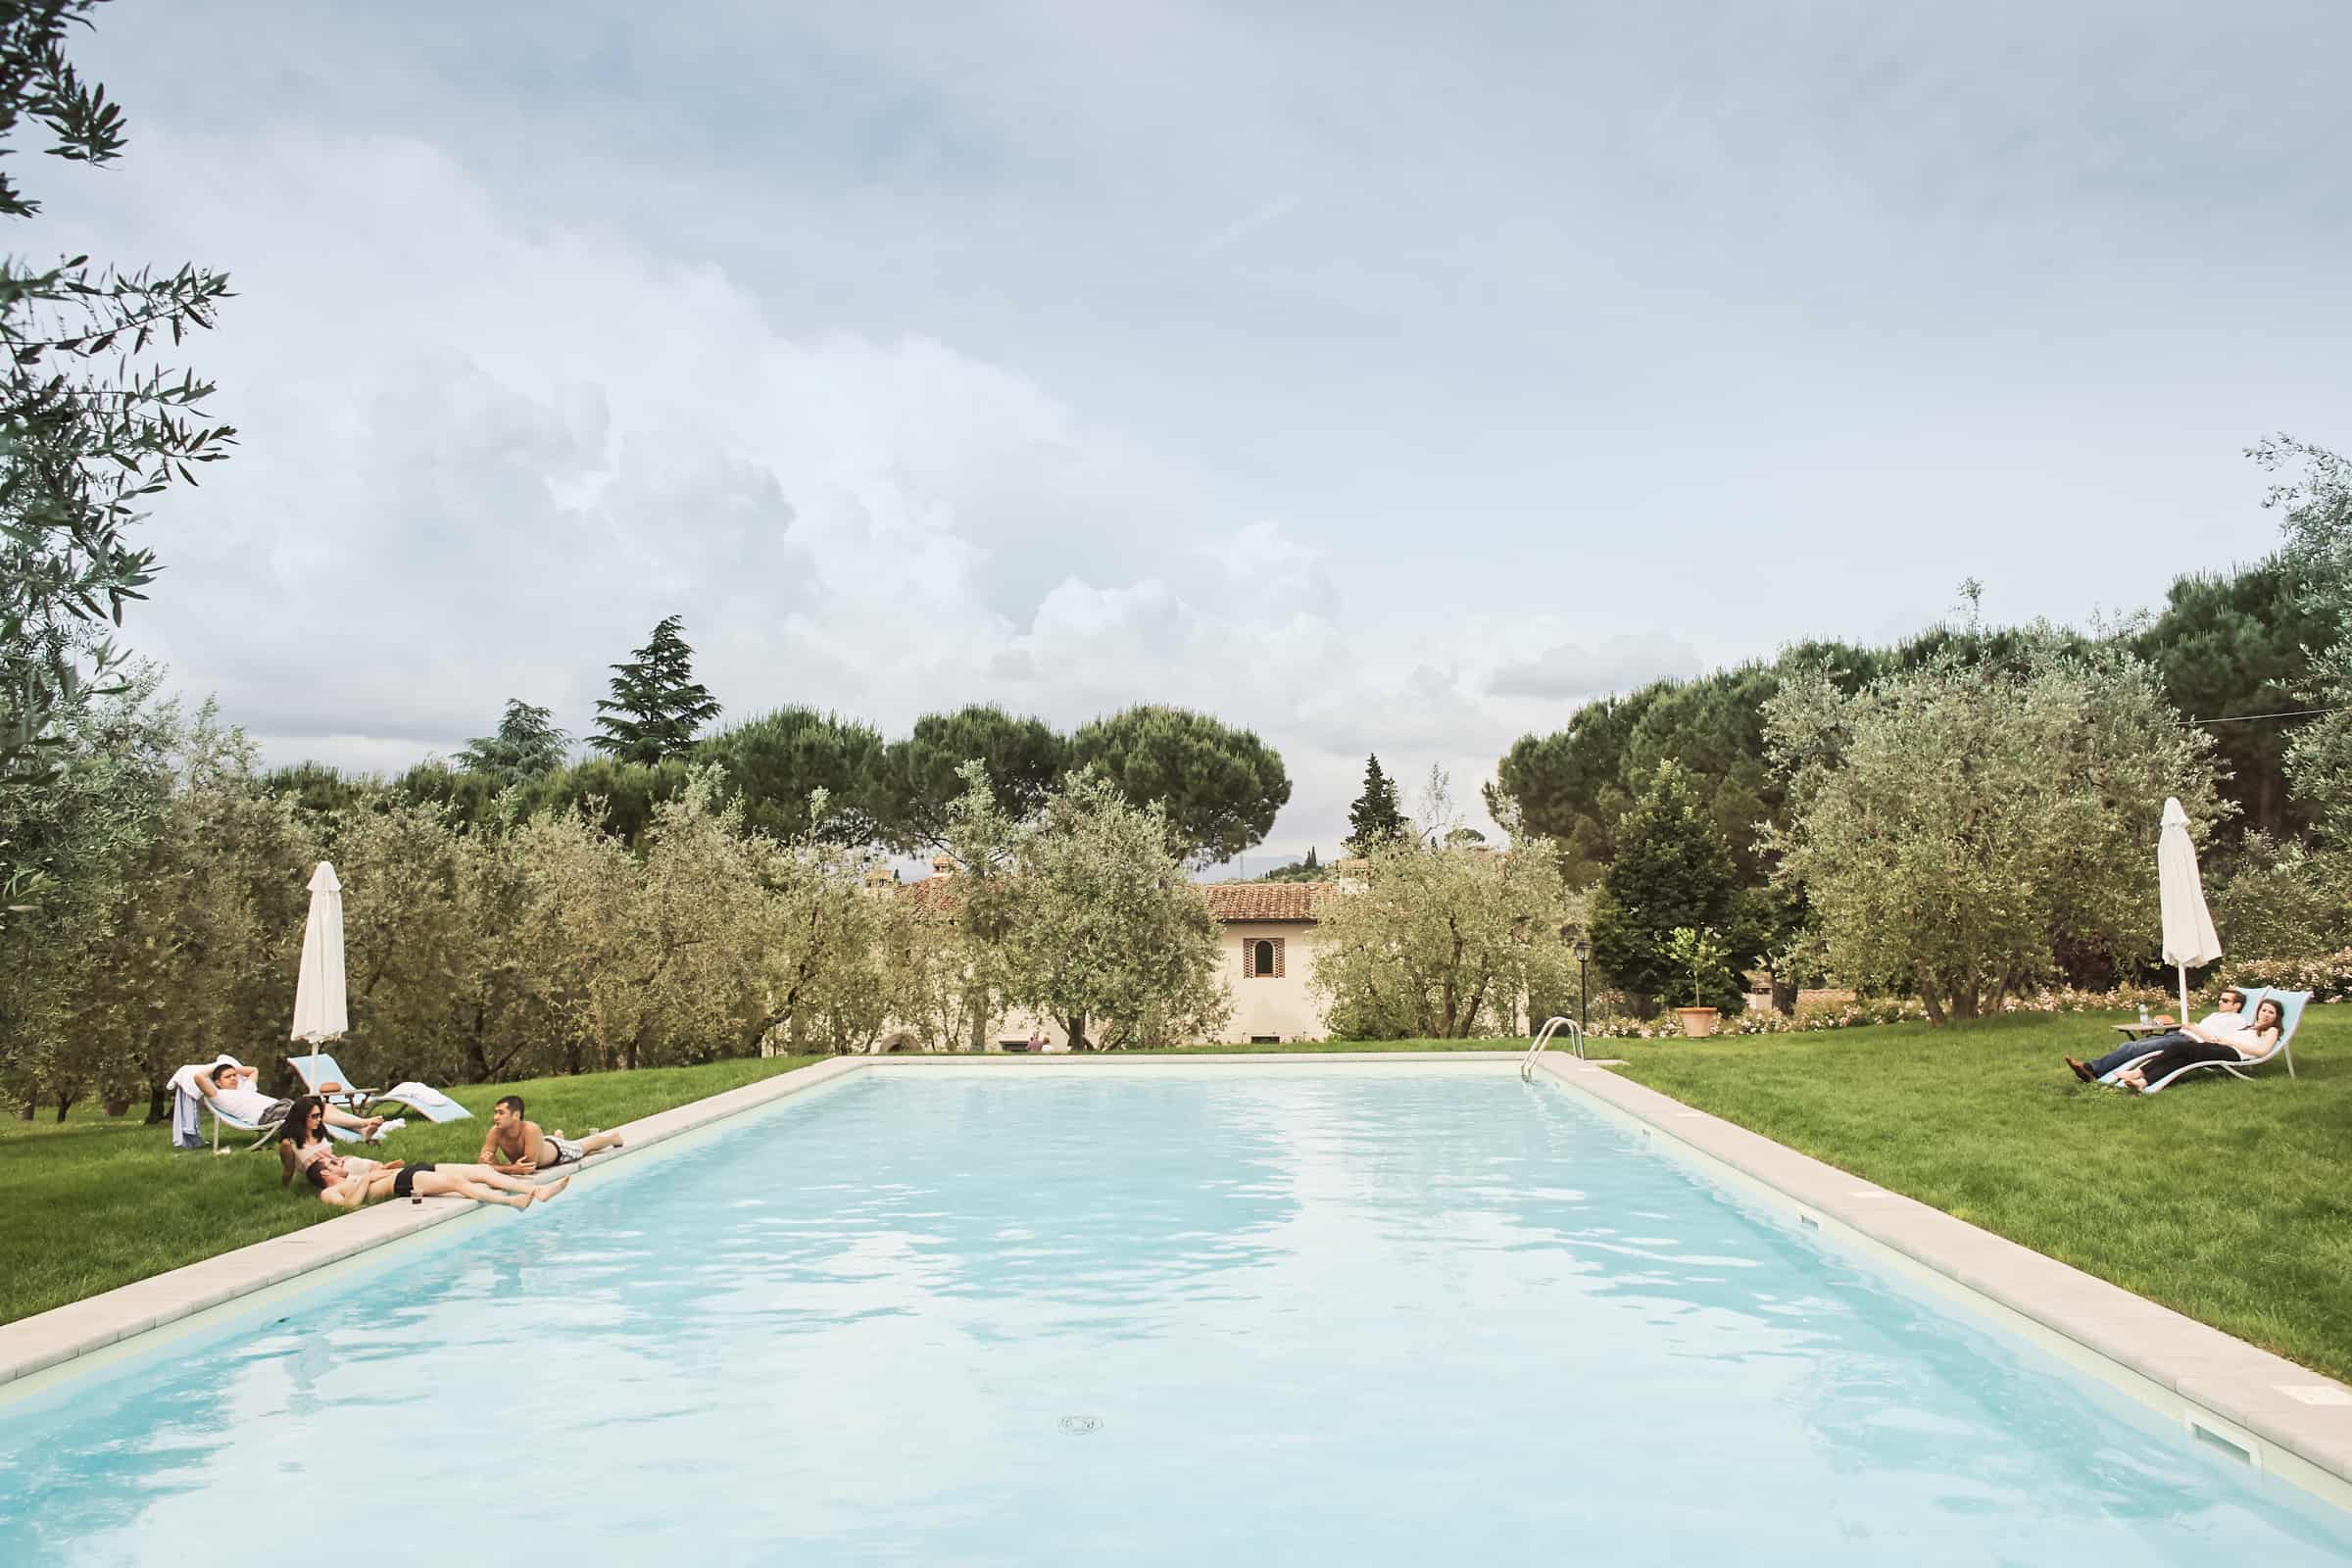 pool and people at Villa Poggio ai Merli